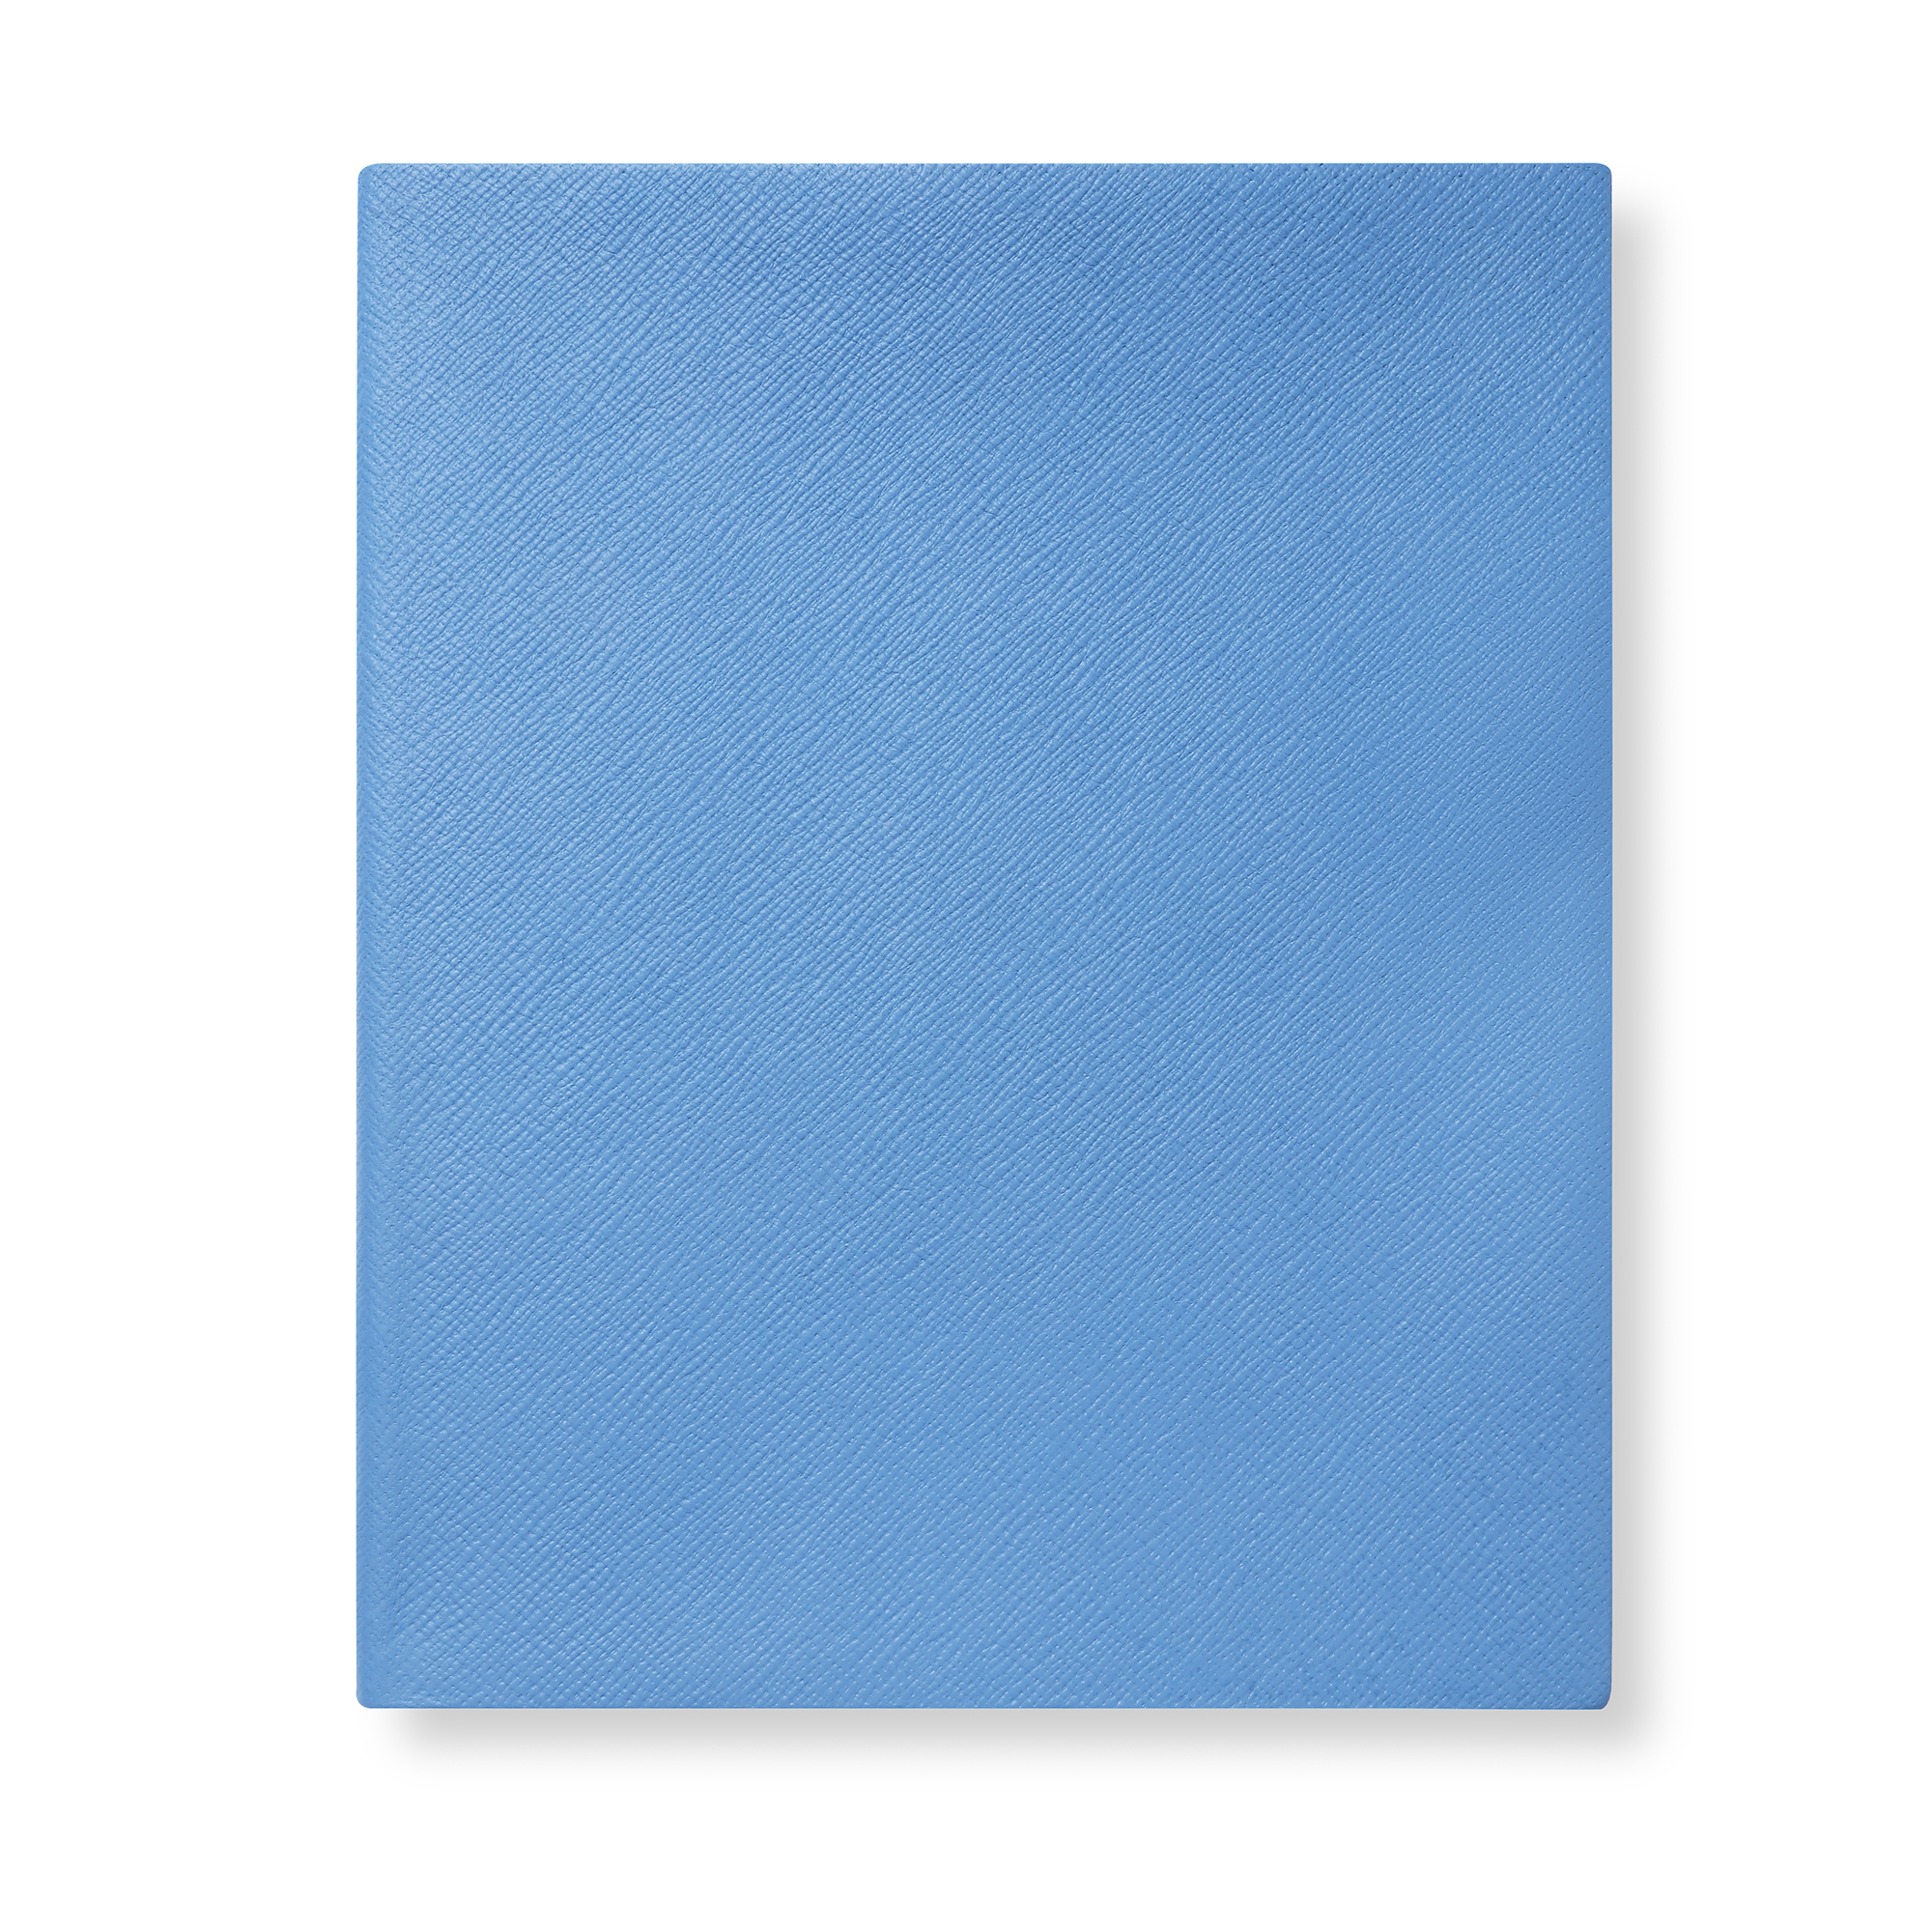 Smythson Portobello Notebook In Panama In Nile Blue